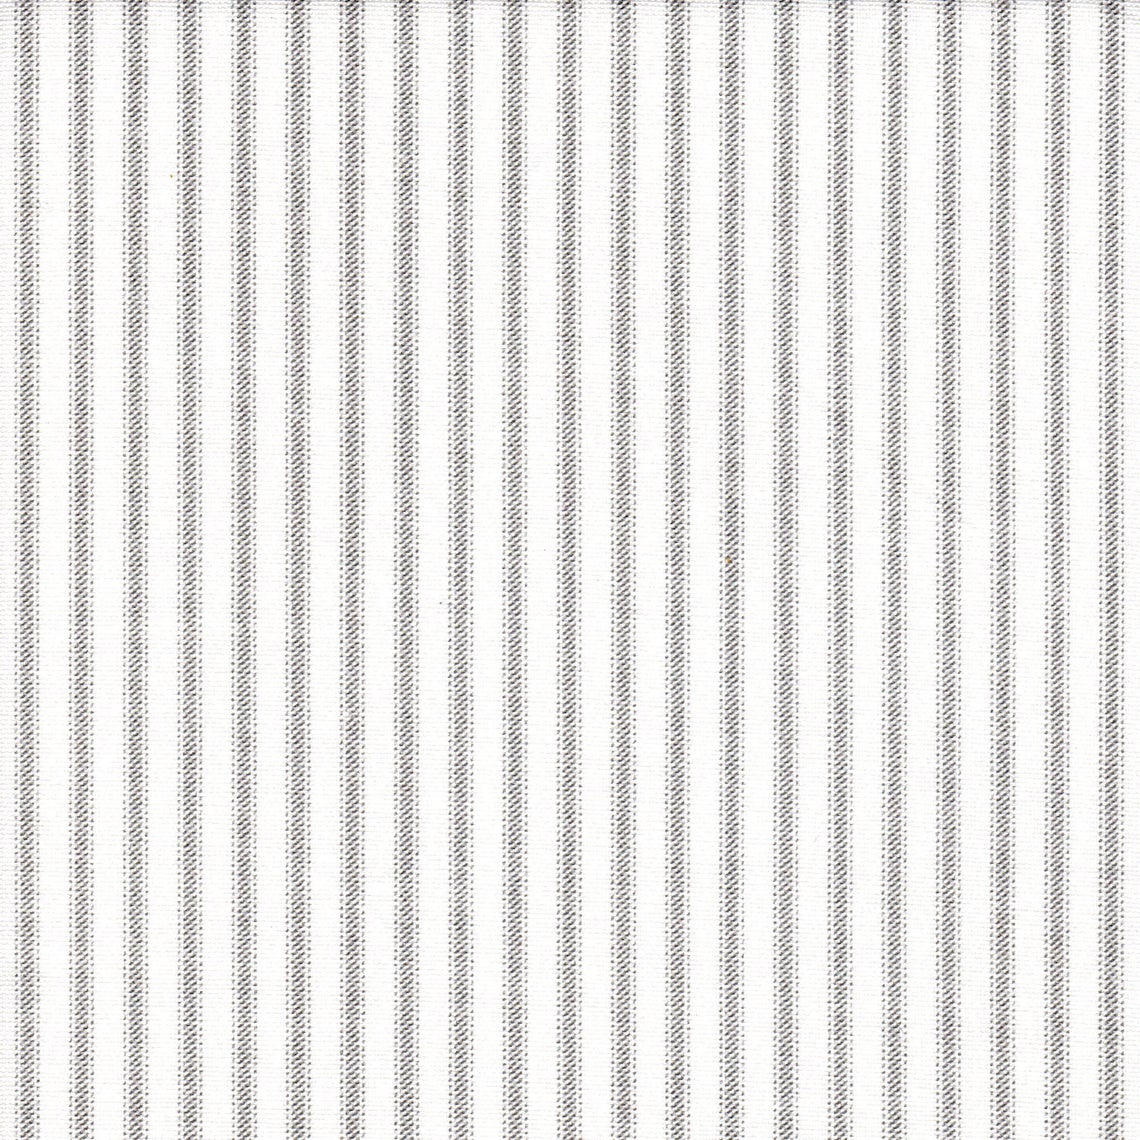 duvet cover in classic storm gray ticking stripe on white